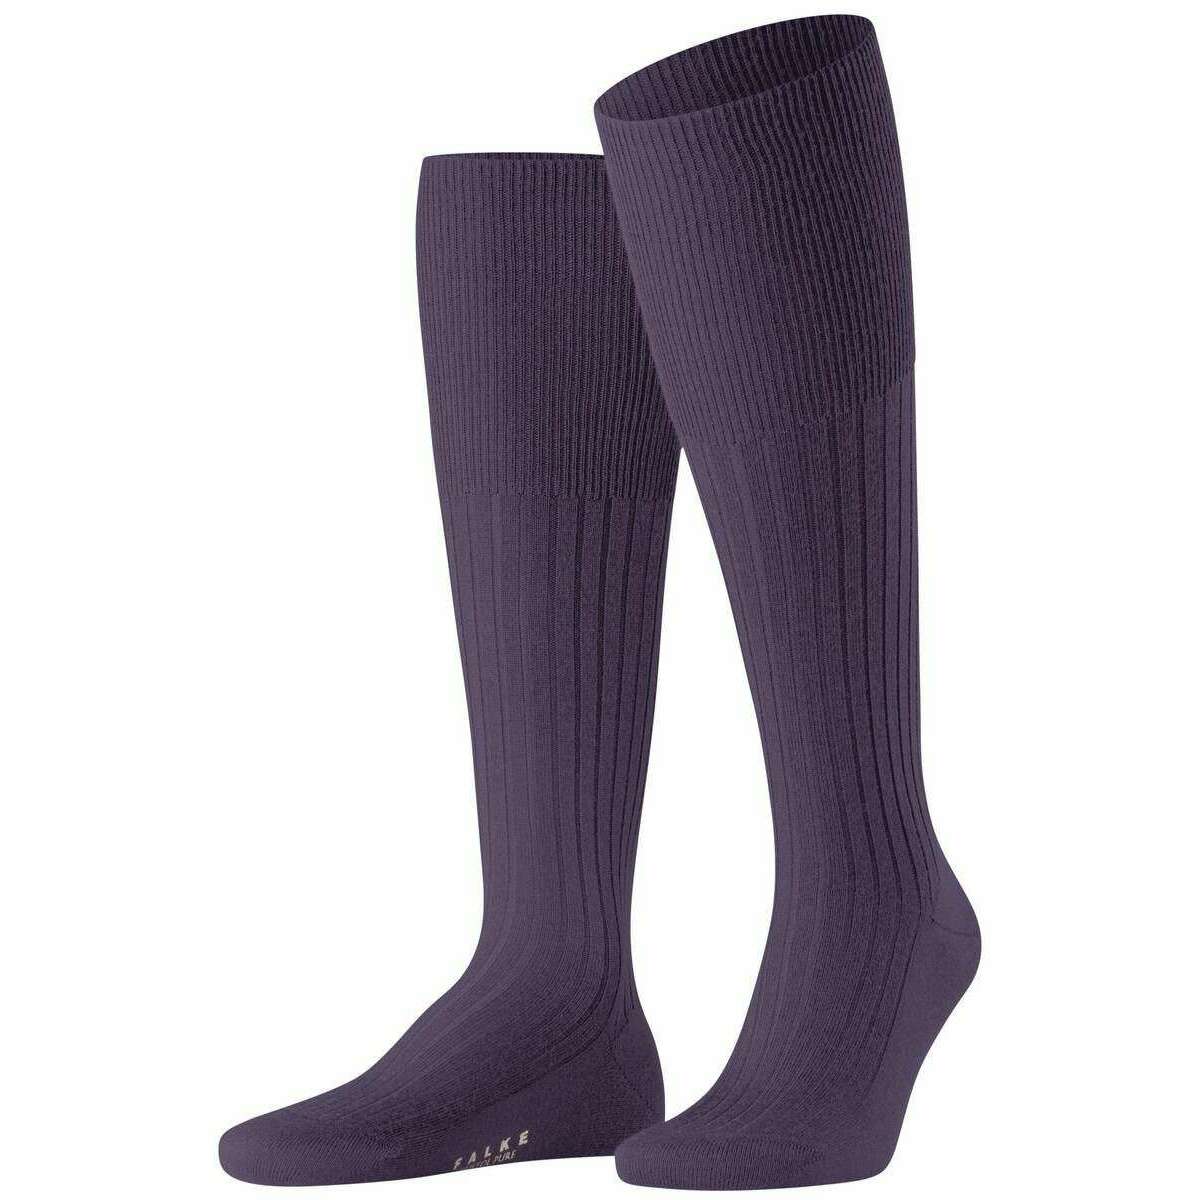 Falke Bristol Pure Knee High Socks - Amethyst Lilac